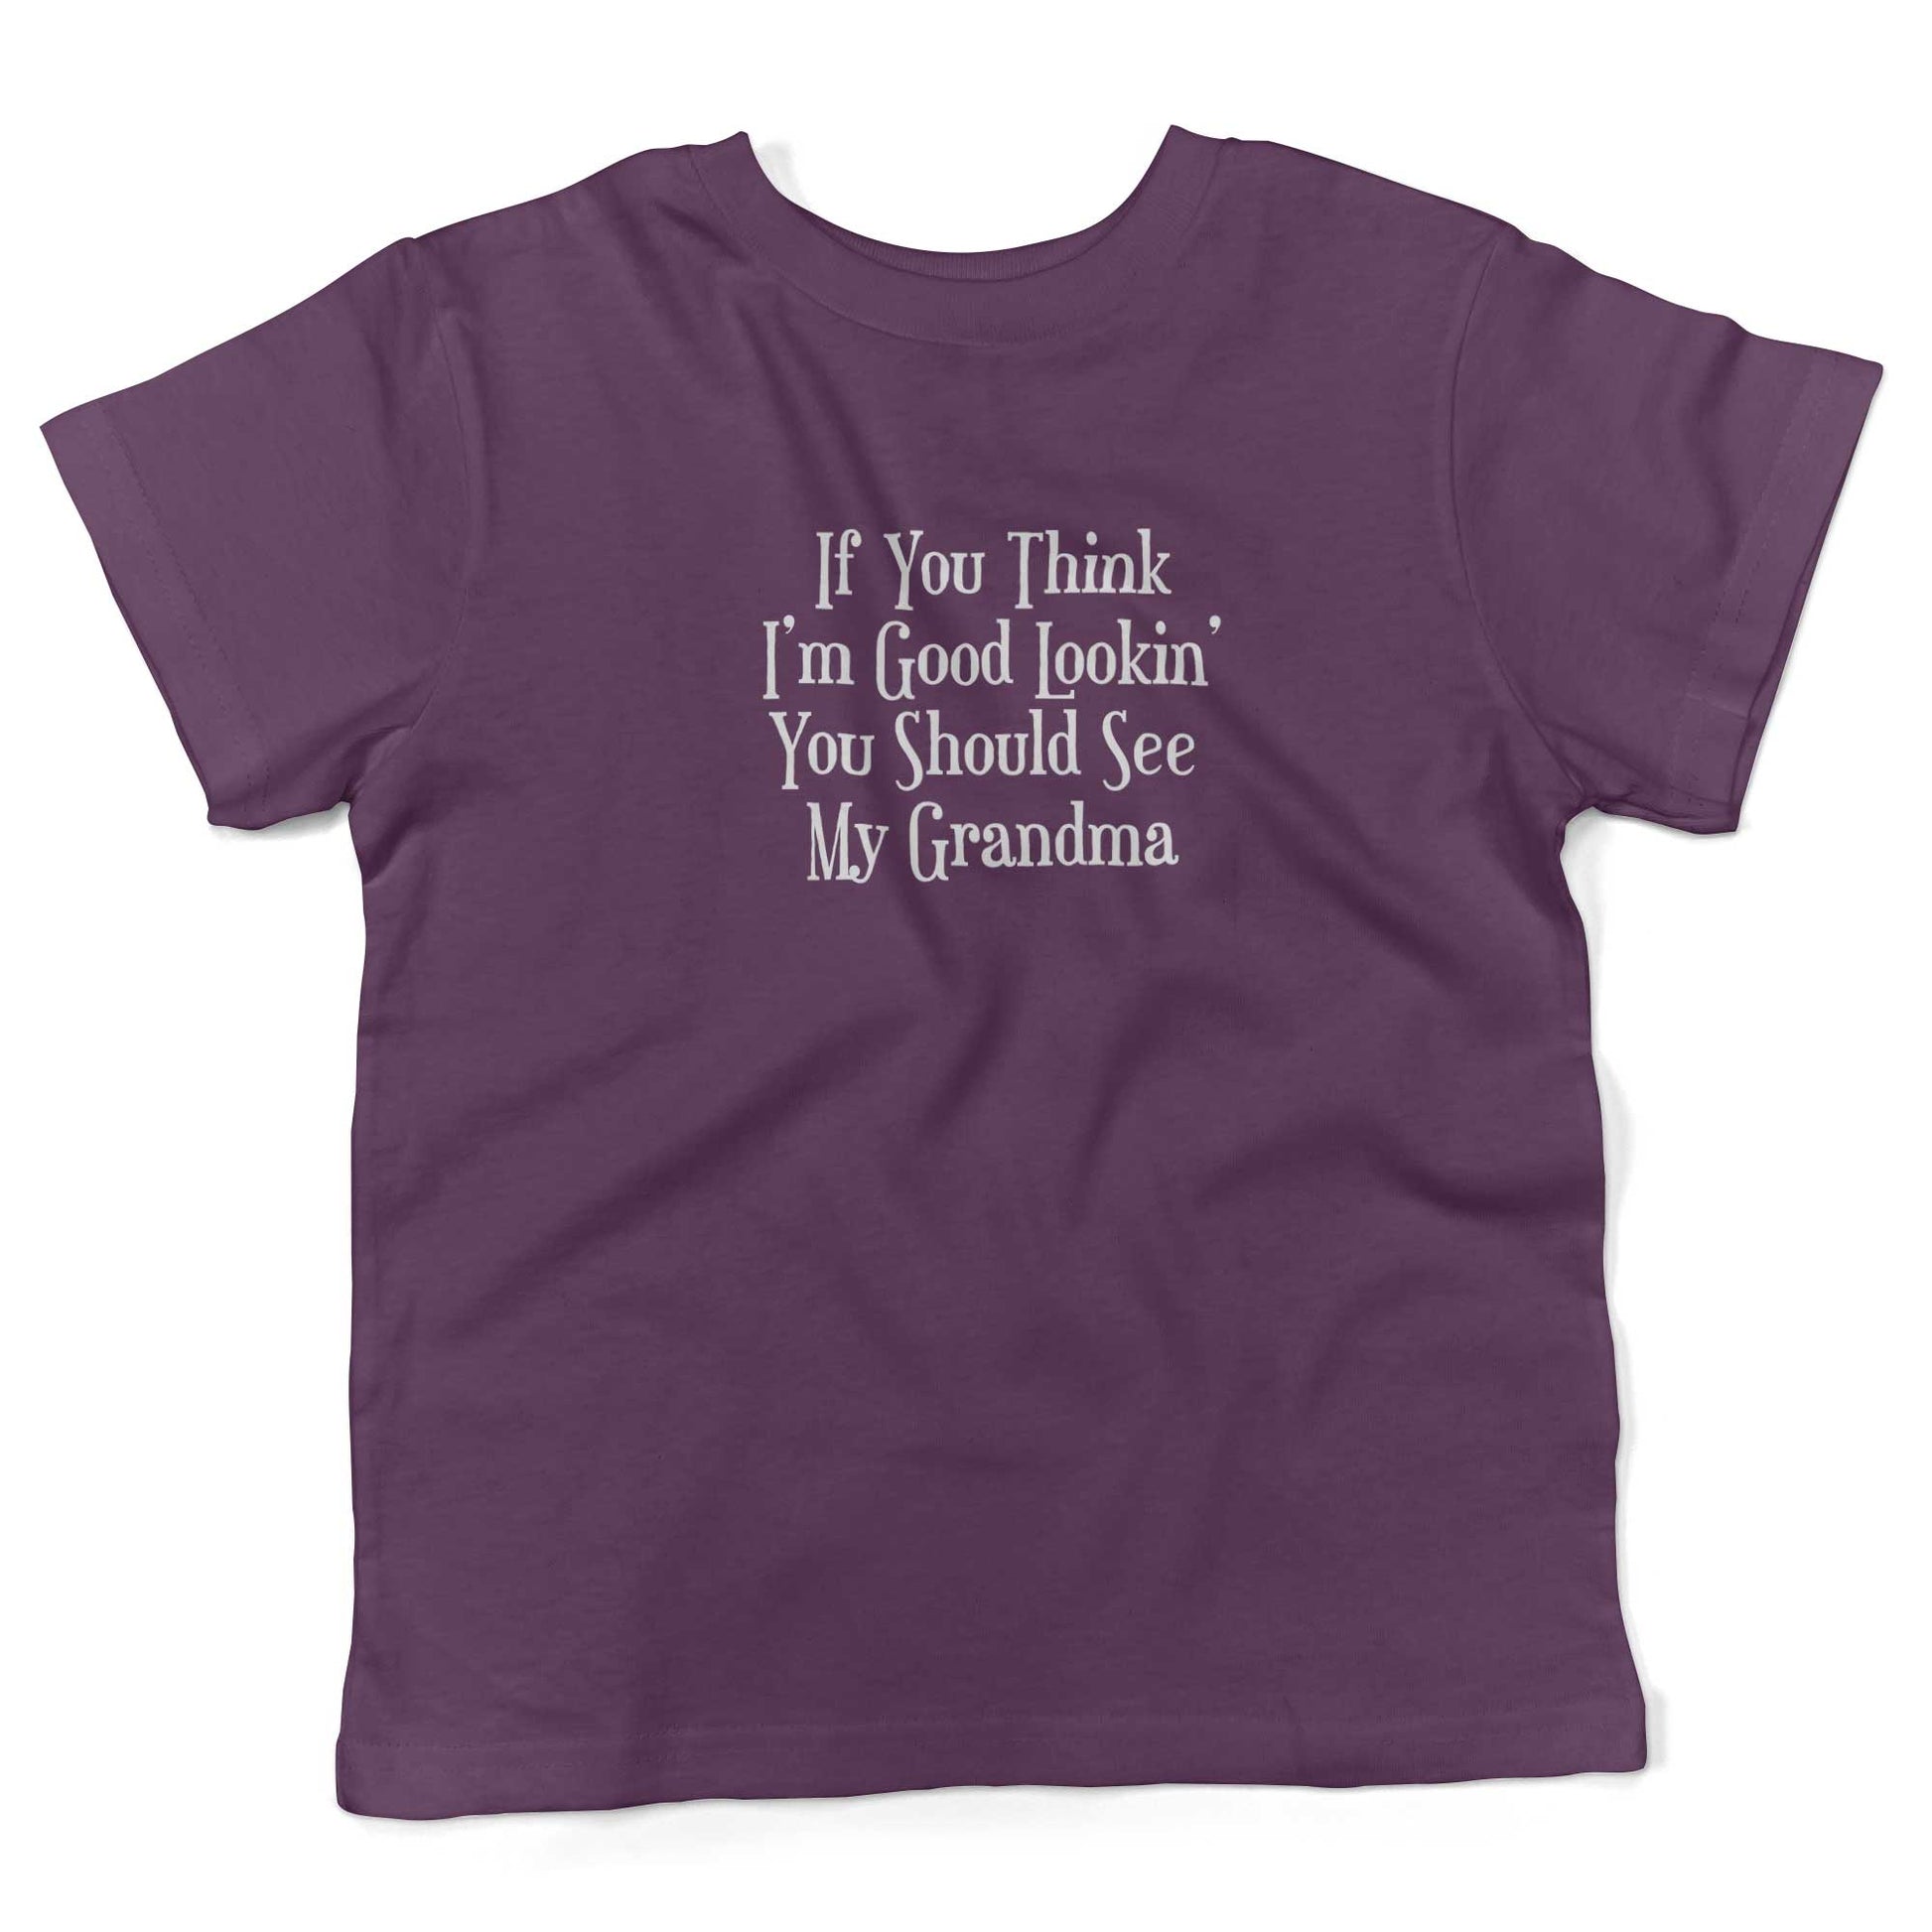 If You Think I'm Good Lookin', You Should See My Grandma Toddler Shirt-Organic Purple-2T